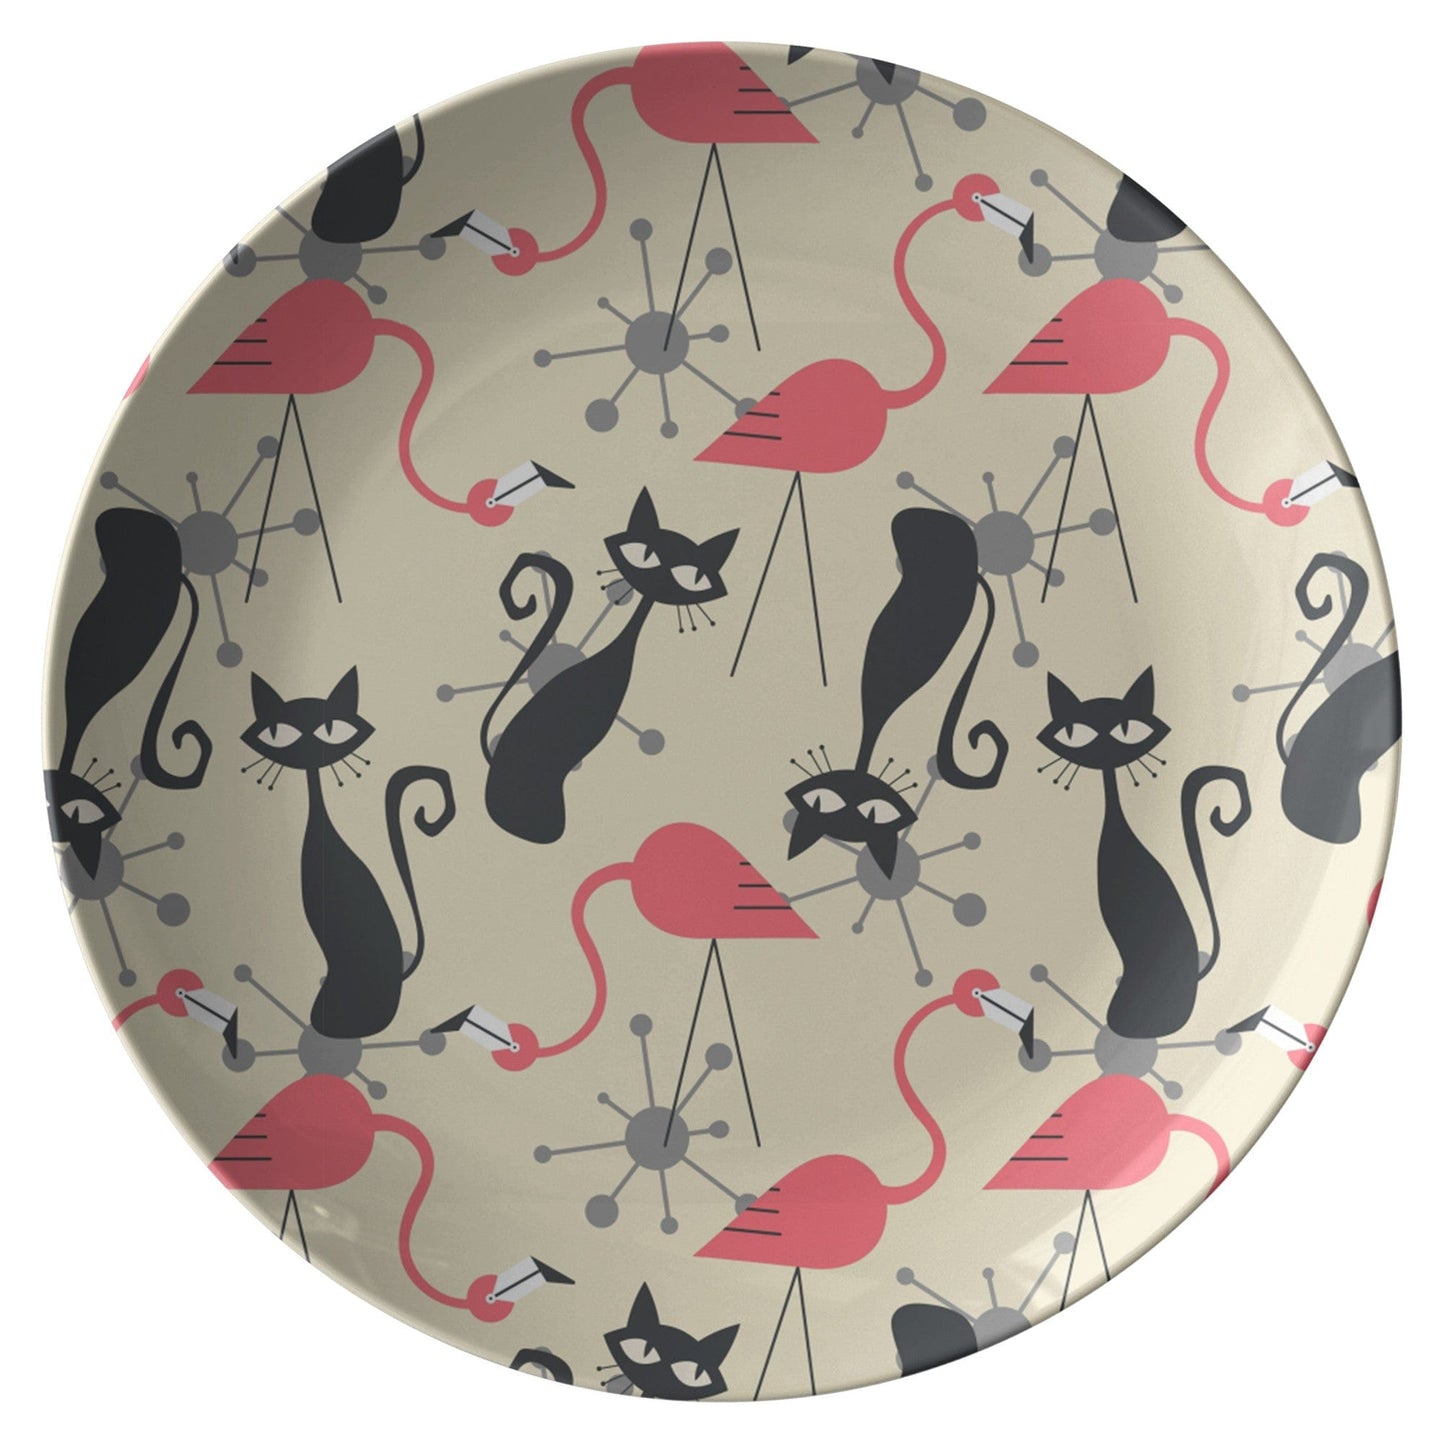 Kate McEnroe New York Atomic Cat, Flamingo Mid Century Modern Dinner Plates, Retro Whimsy MCM Starburst Cream, Pink, Gray Dishes Plates